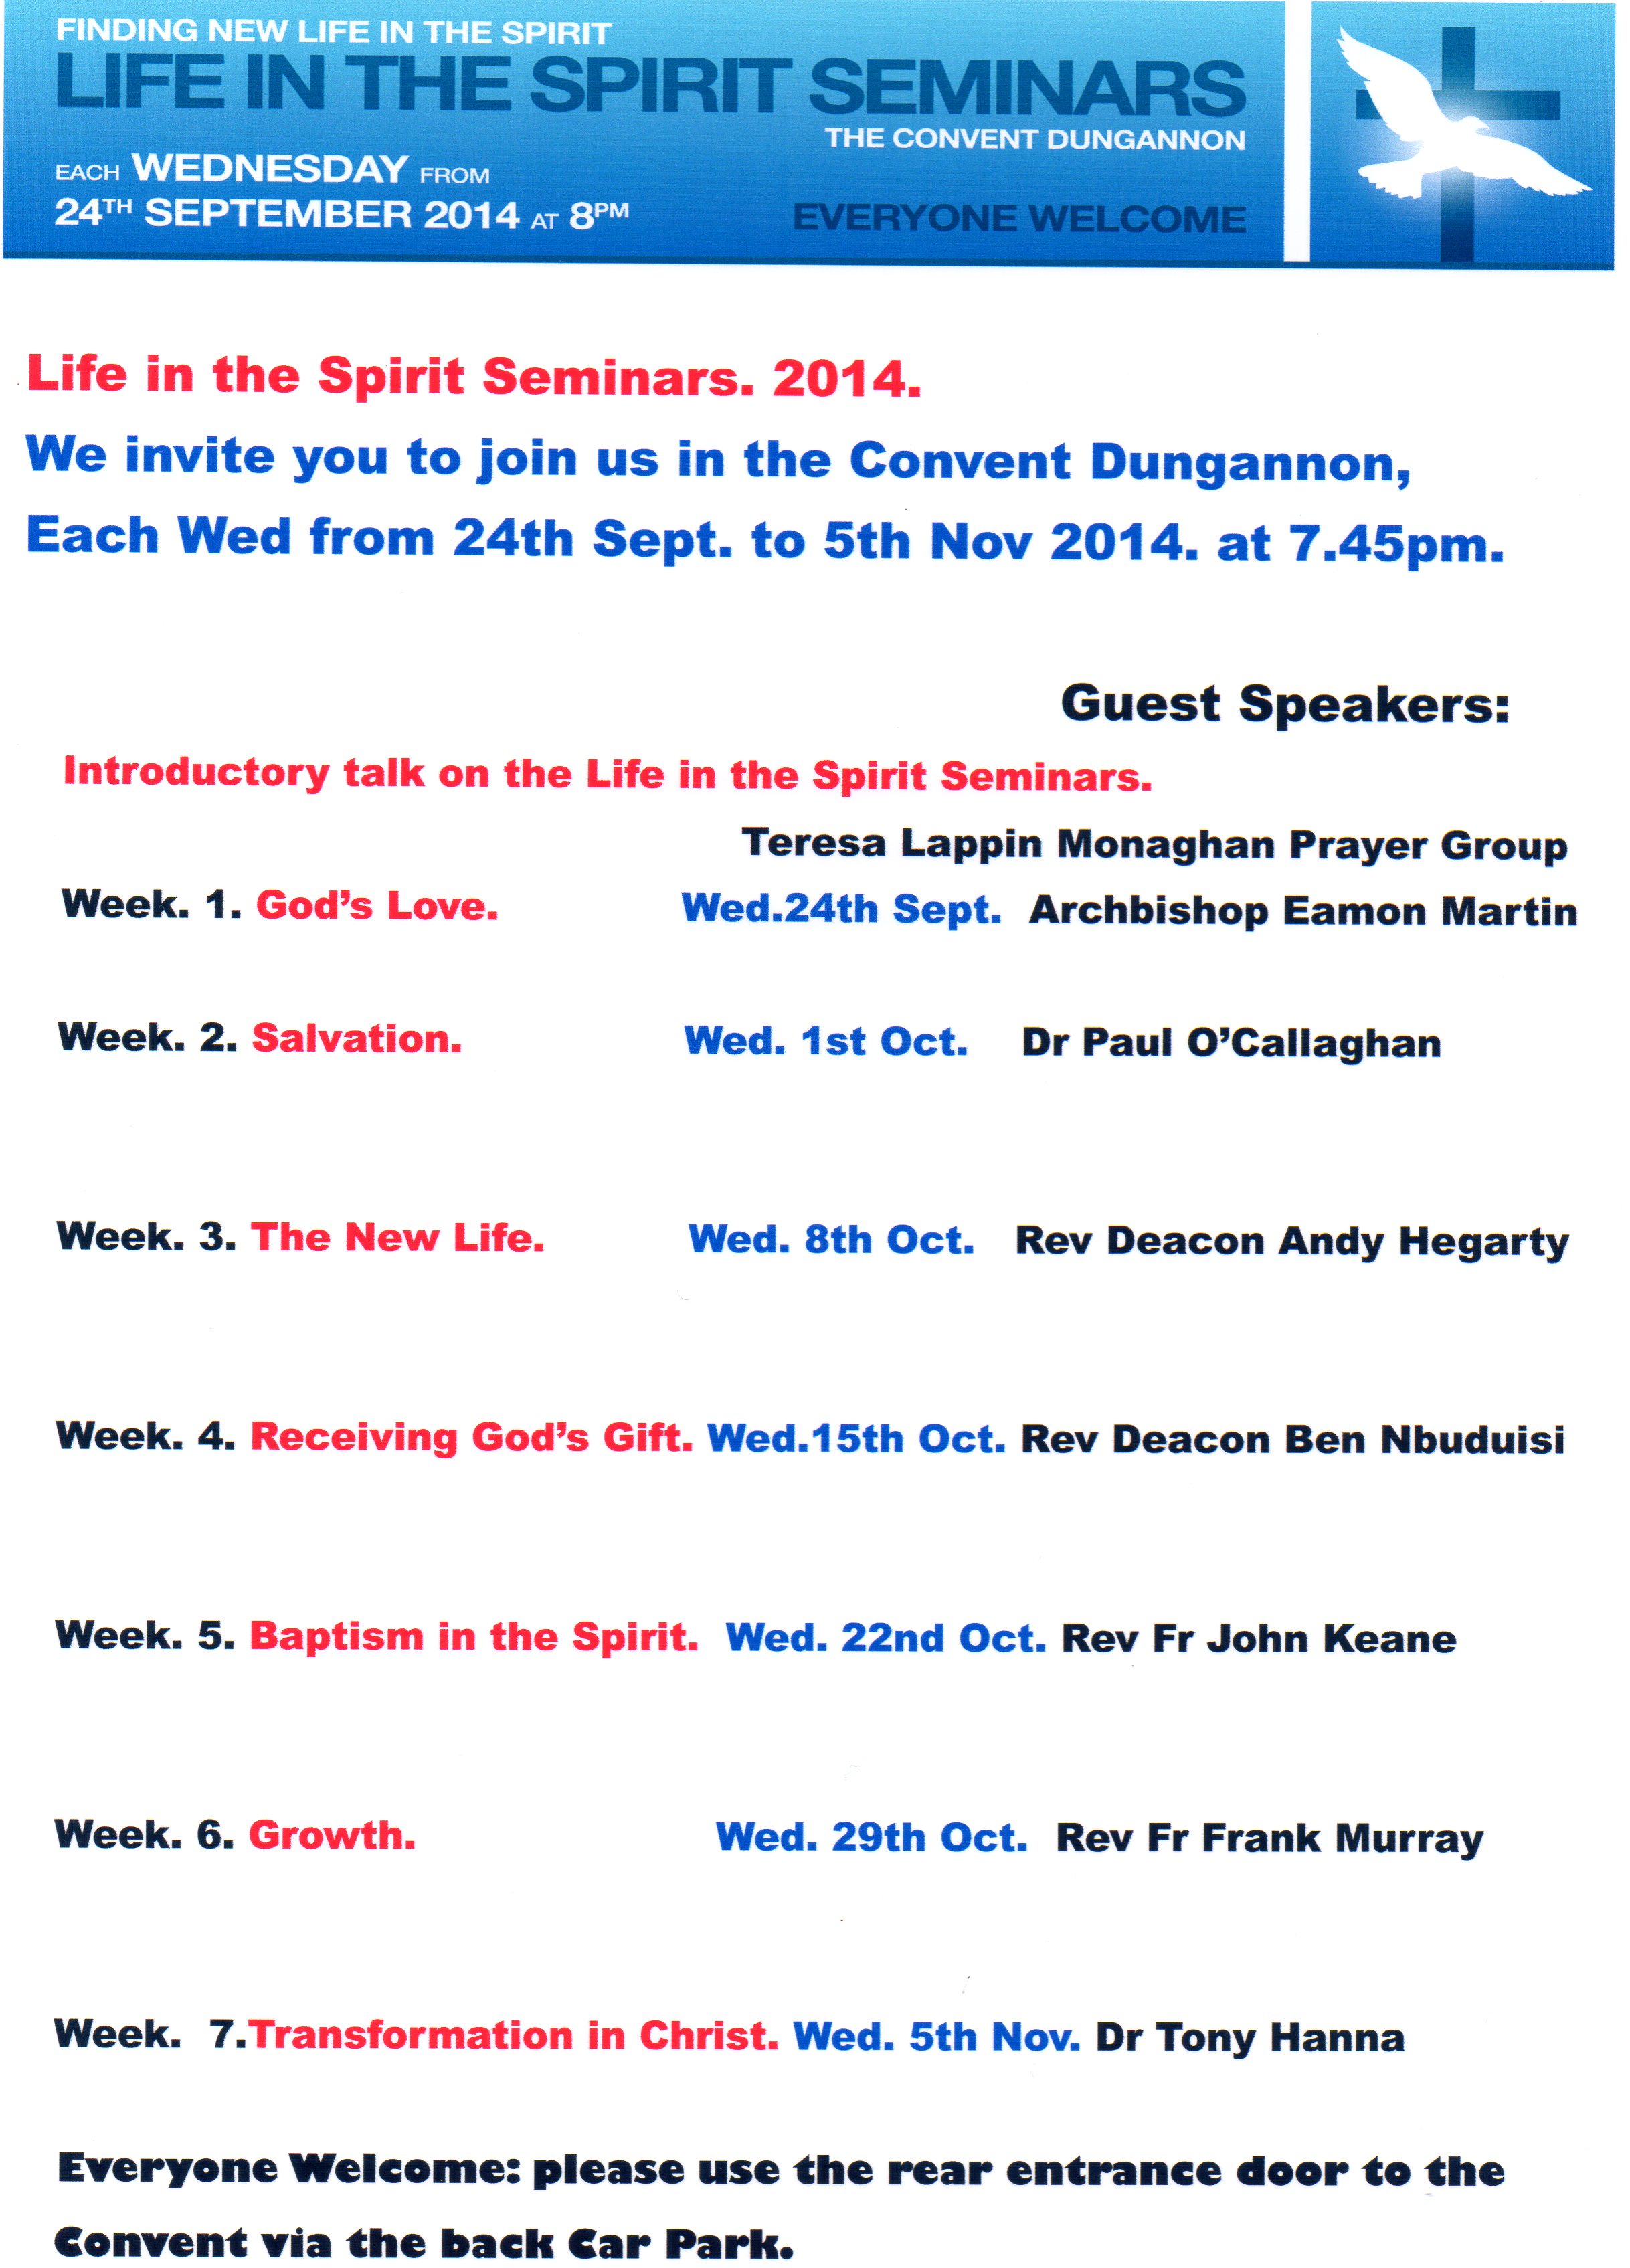 Life in the Spirit Seminars @ Convent of Mercy, Dungannon